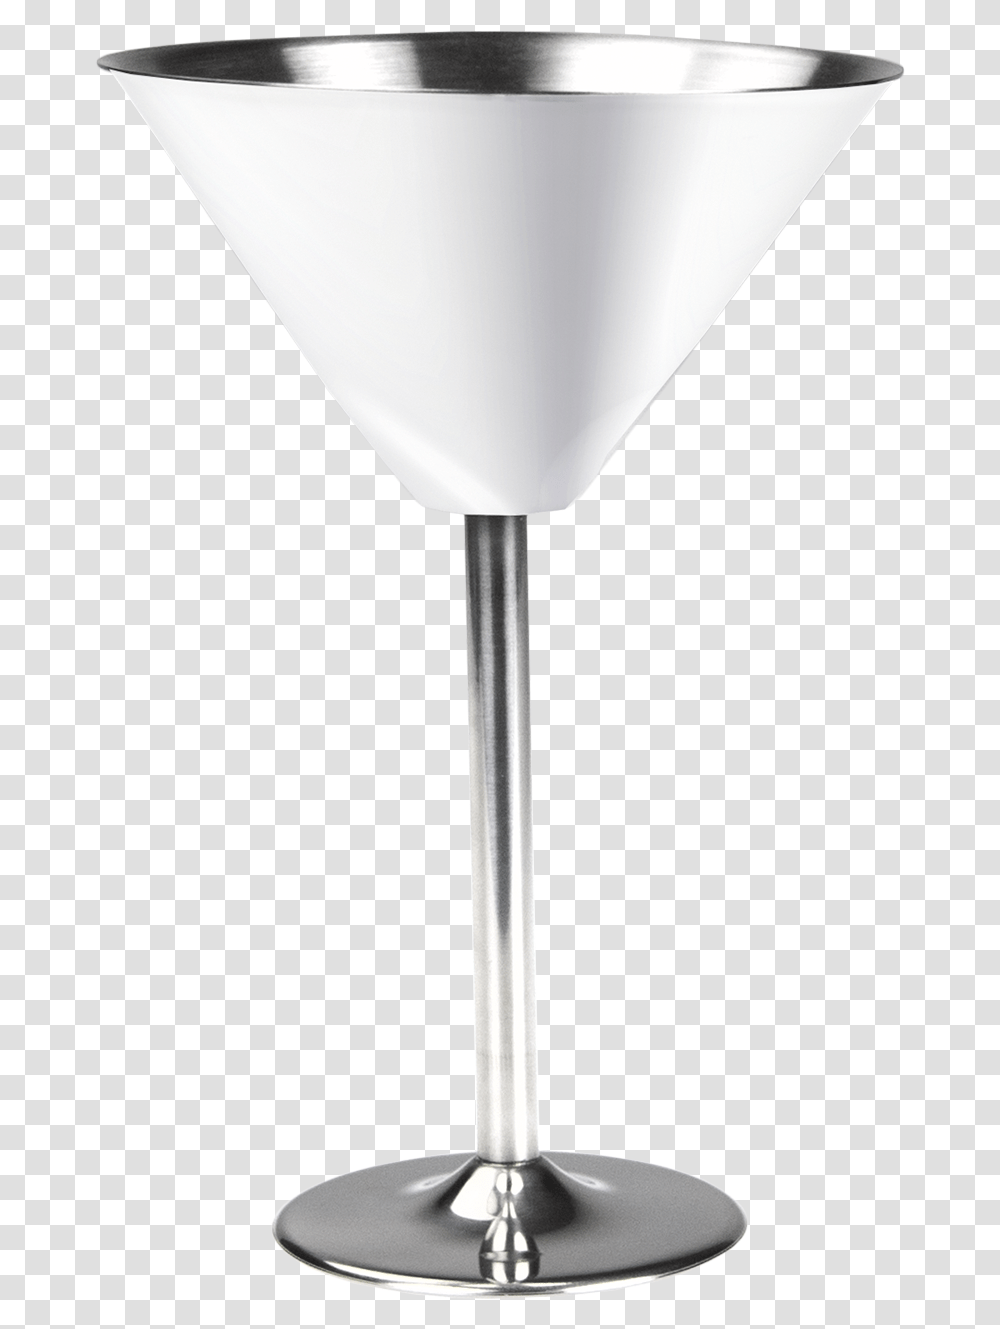 Martini Glass, Lamp, Cocktail, Alcohol, Beverage Transparent Png